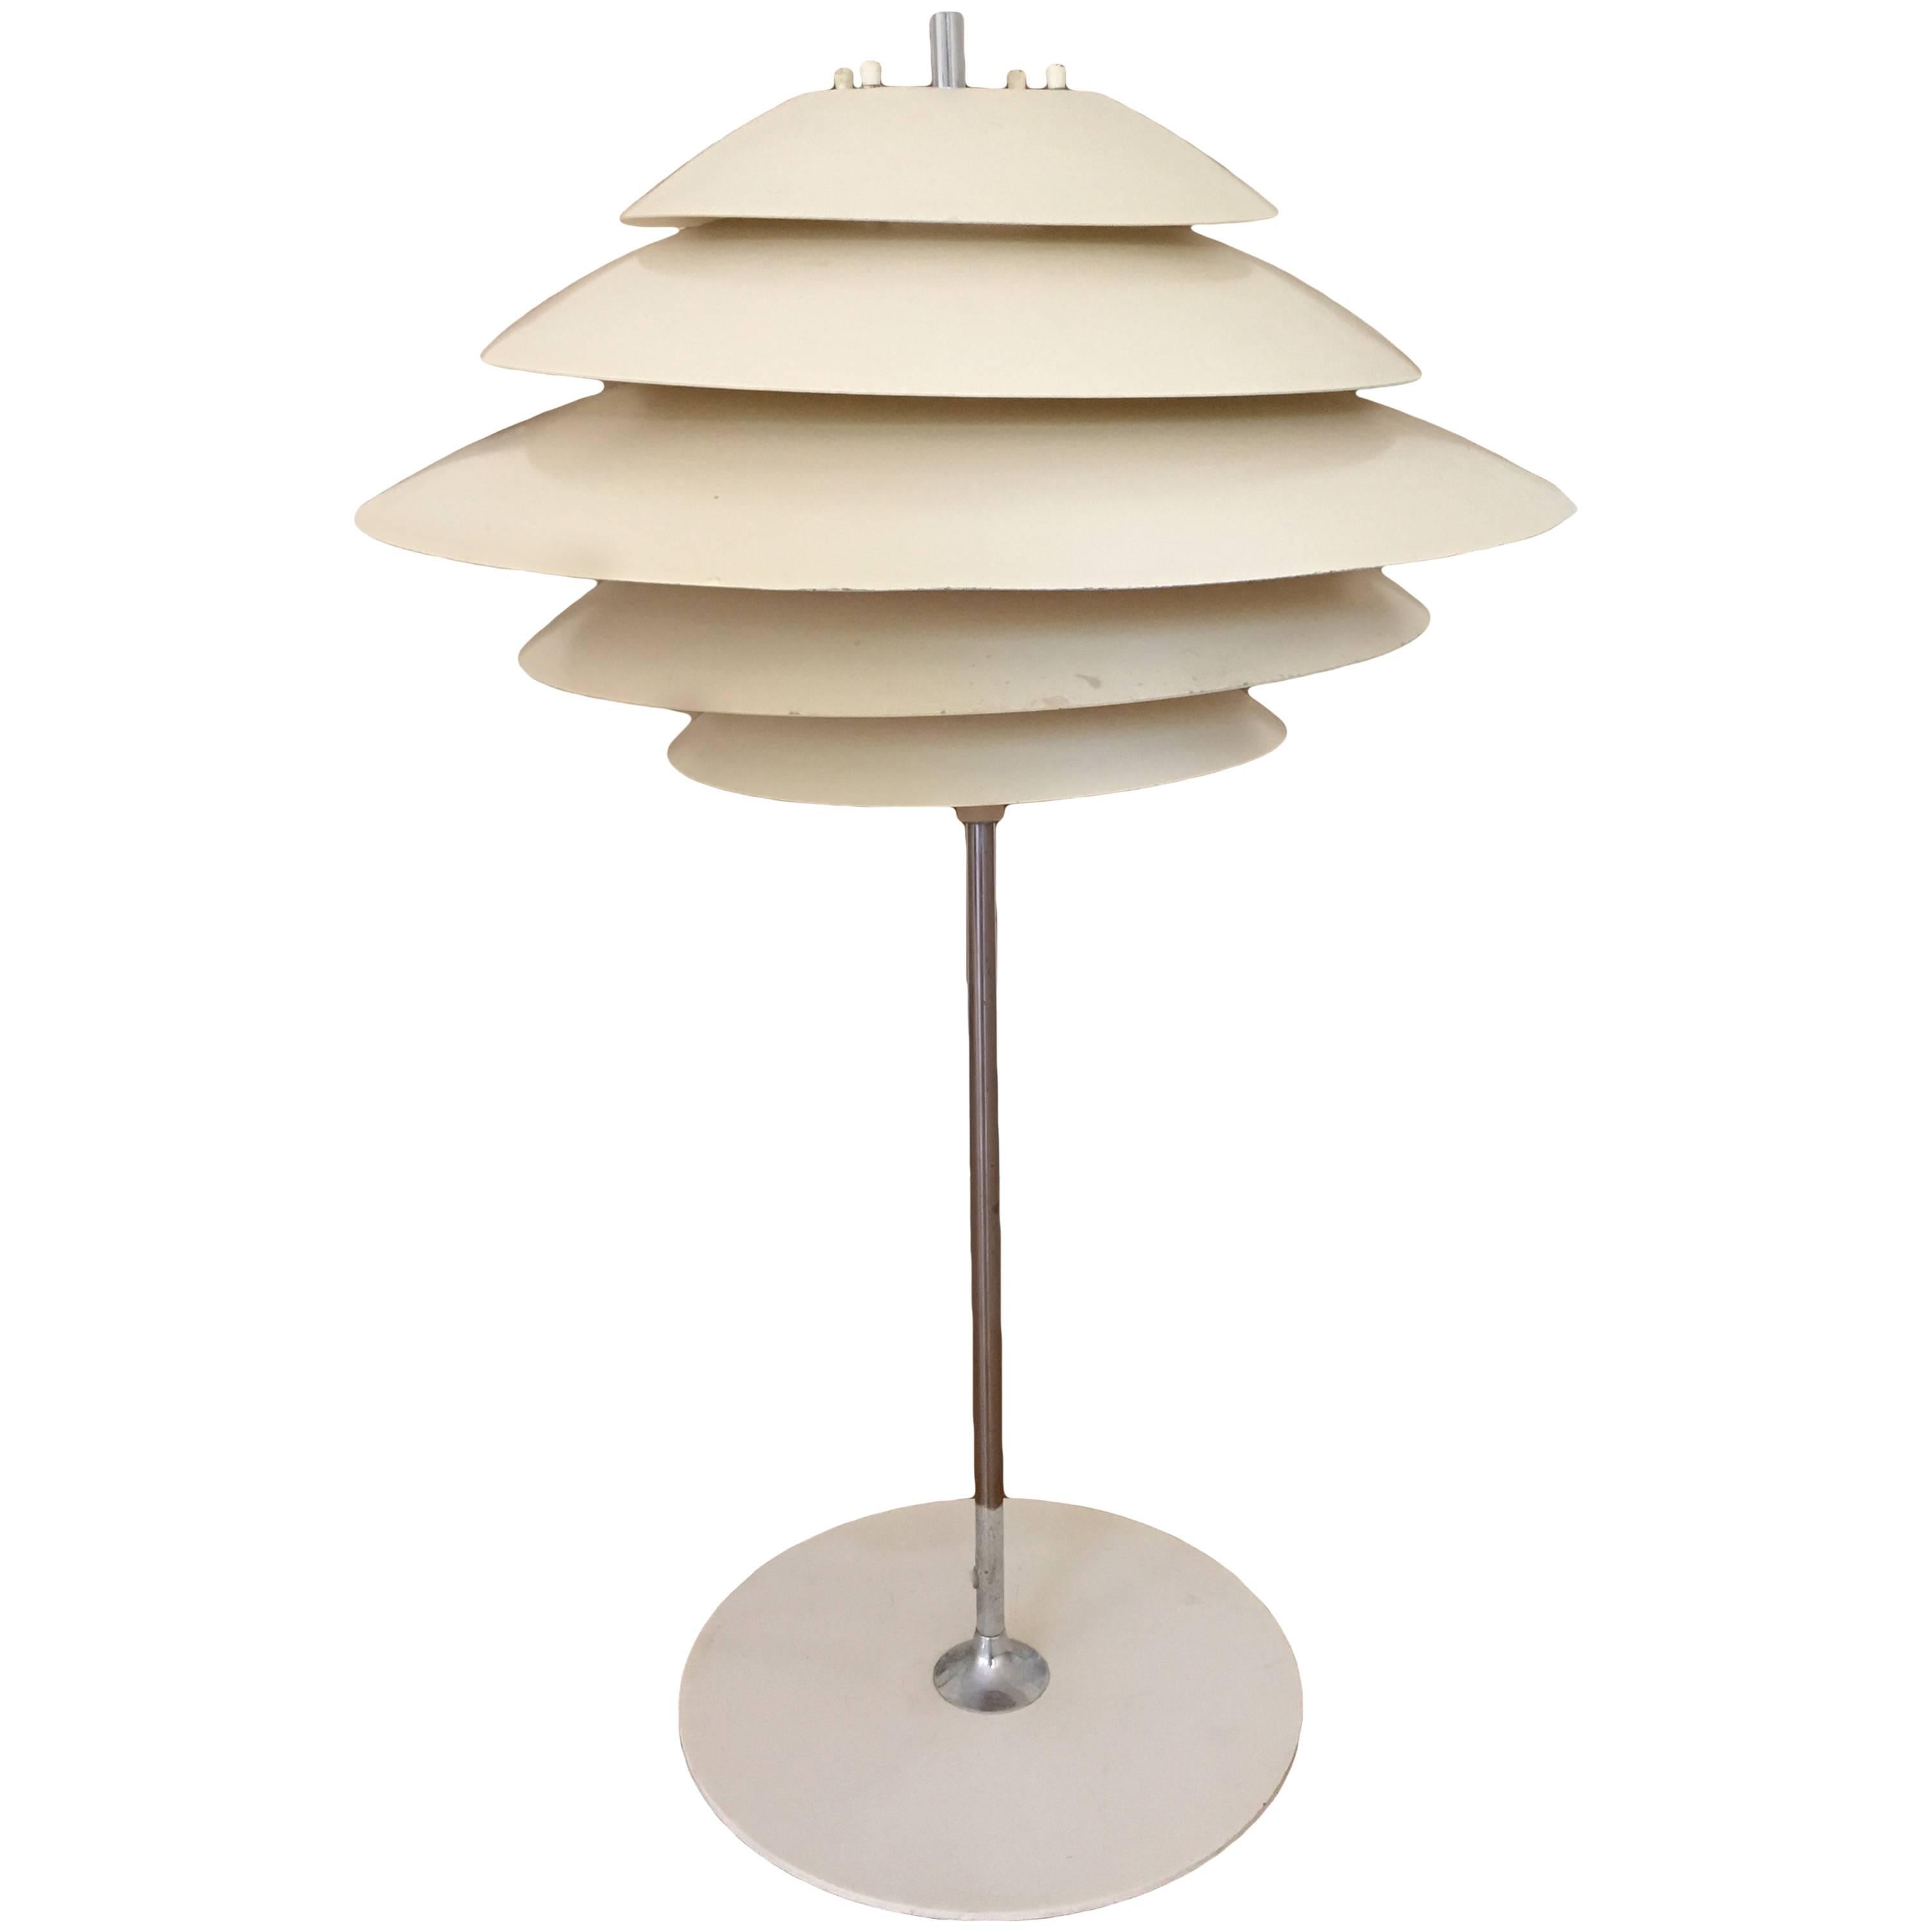 Poul Henningsen Style Table Lamp by Sonneman For Sale